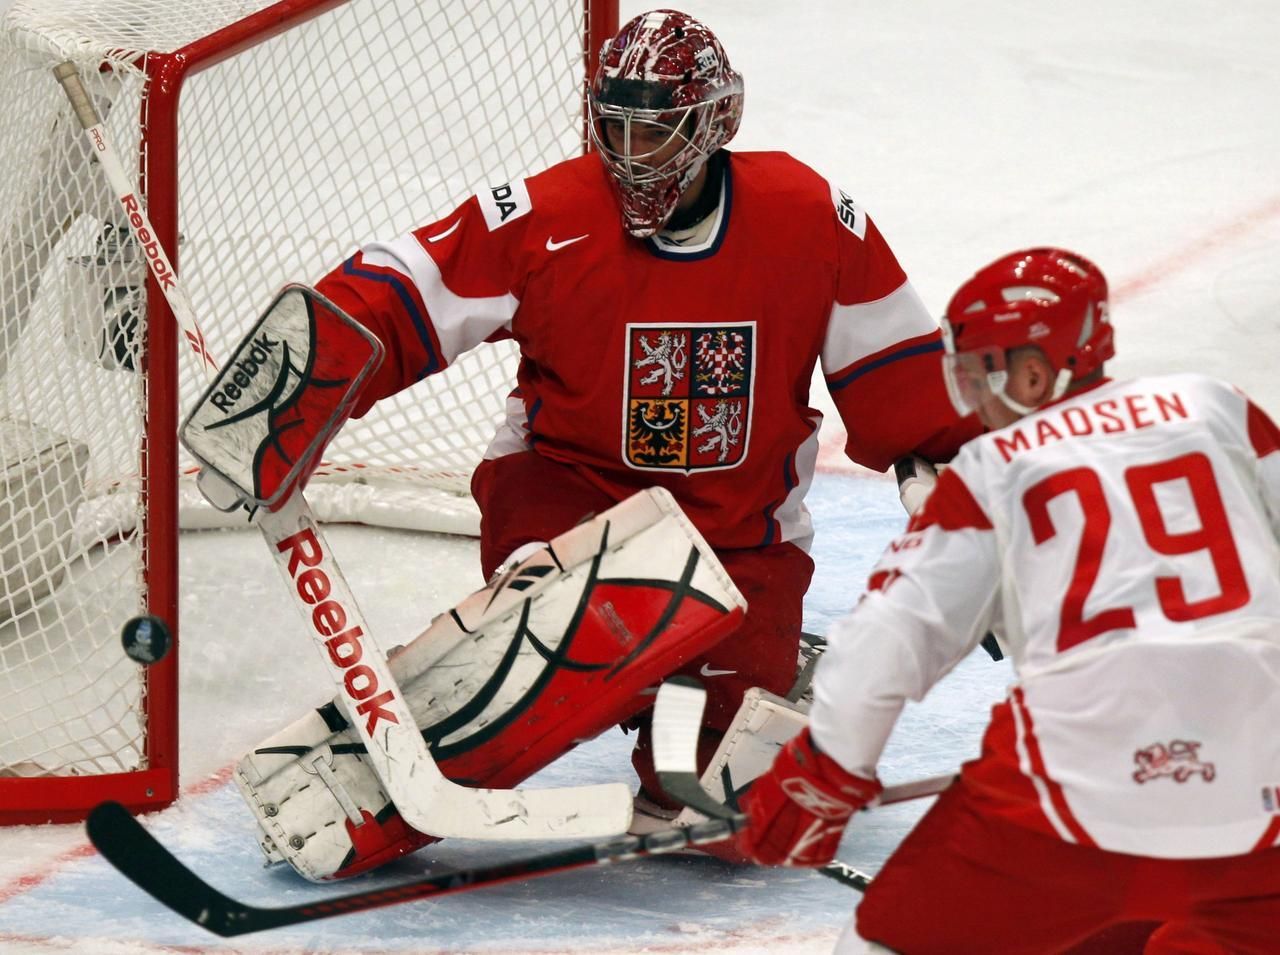 MS v hokeji 2012: Česko - Dánsko (Jakub Kovář, Madsen)